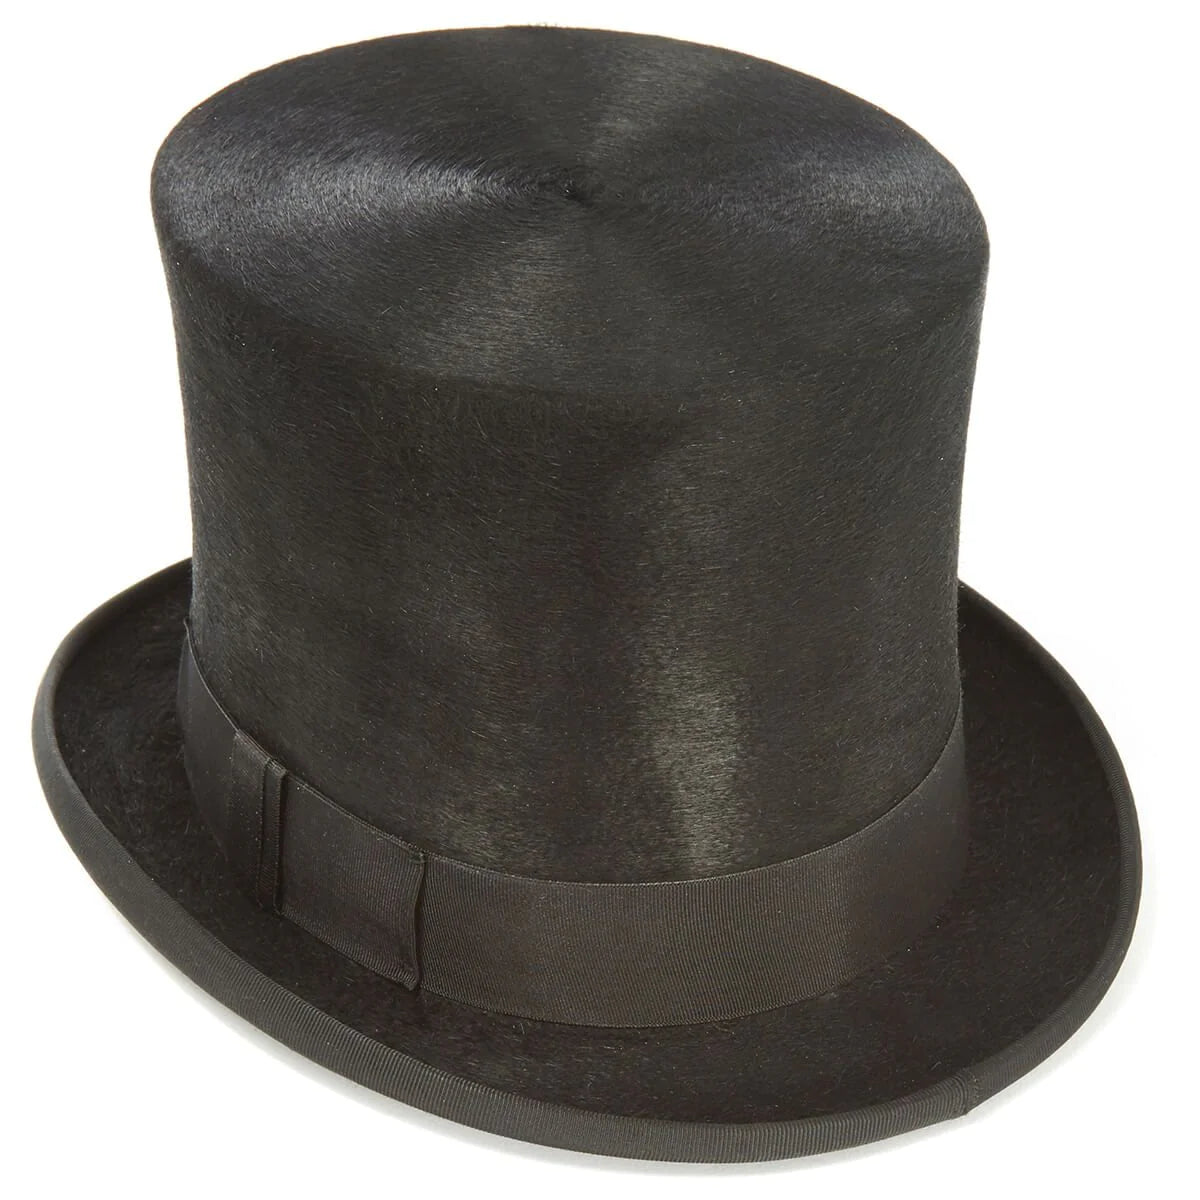 CHRISTYS' Luxury Fur Felt Melusine Taller Top Hat - Antique Silk Look - Black